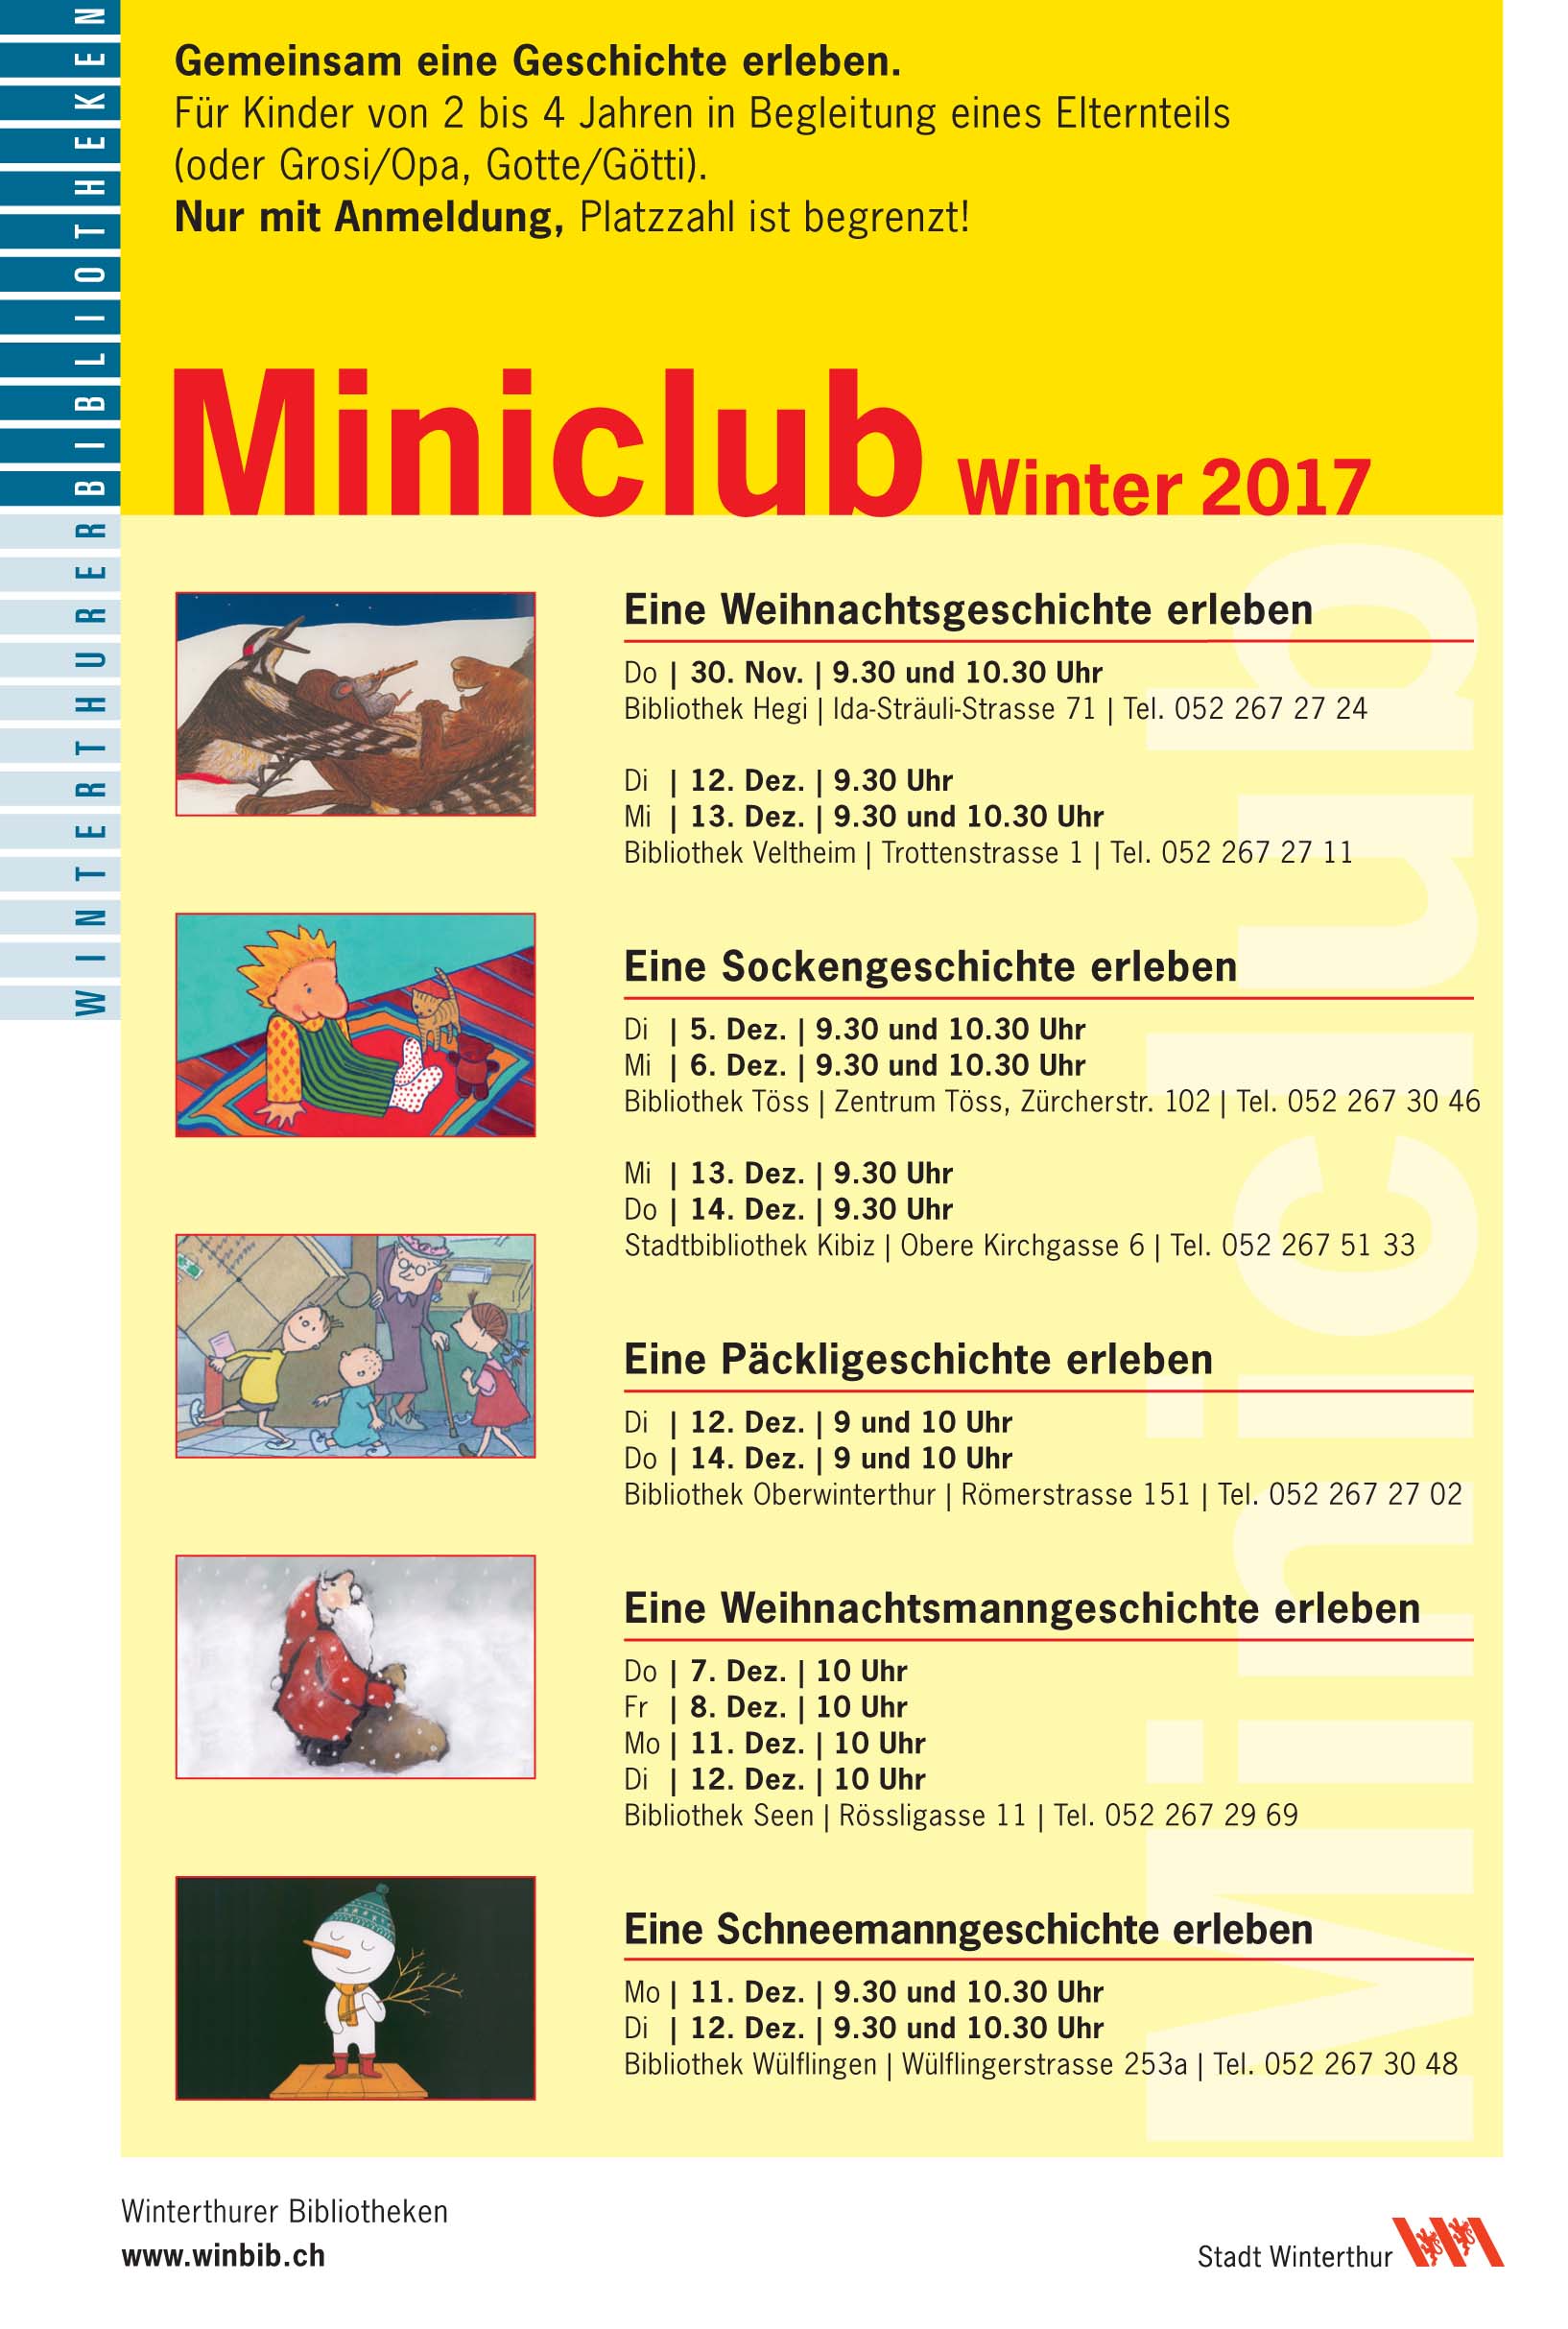 biblio miniclub winter 17